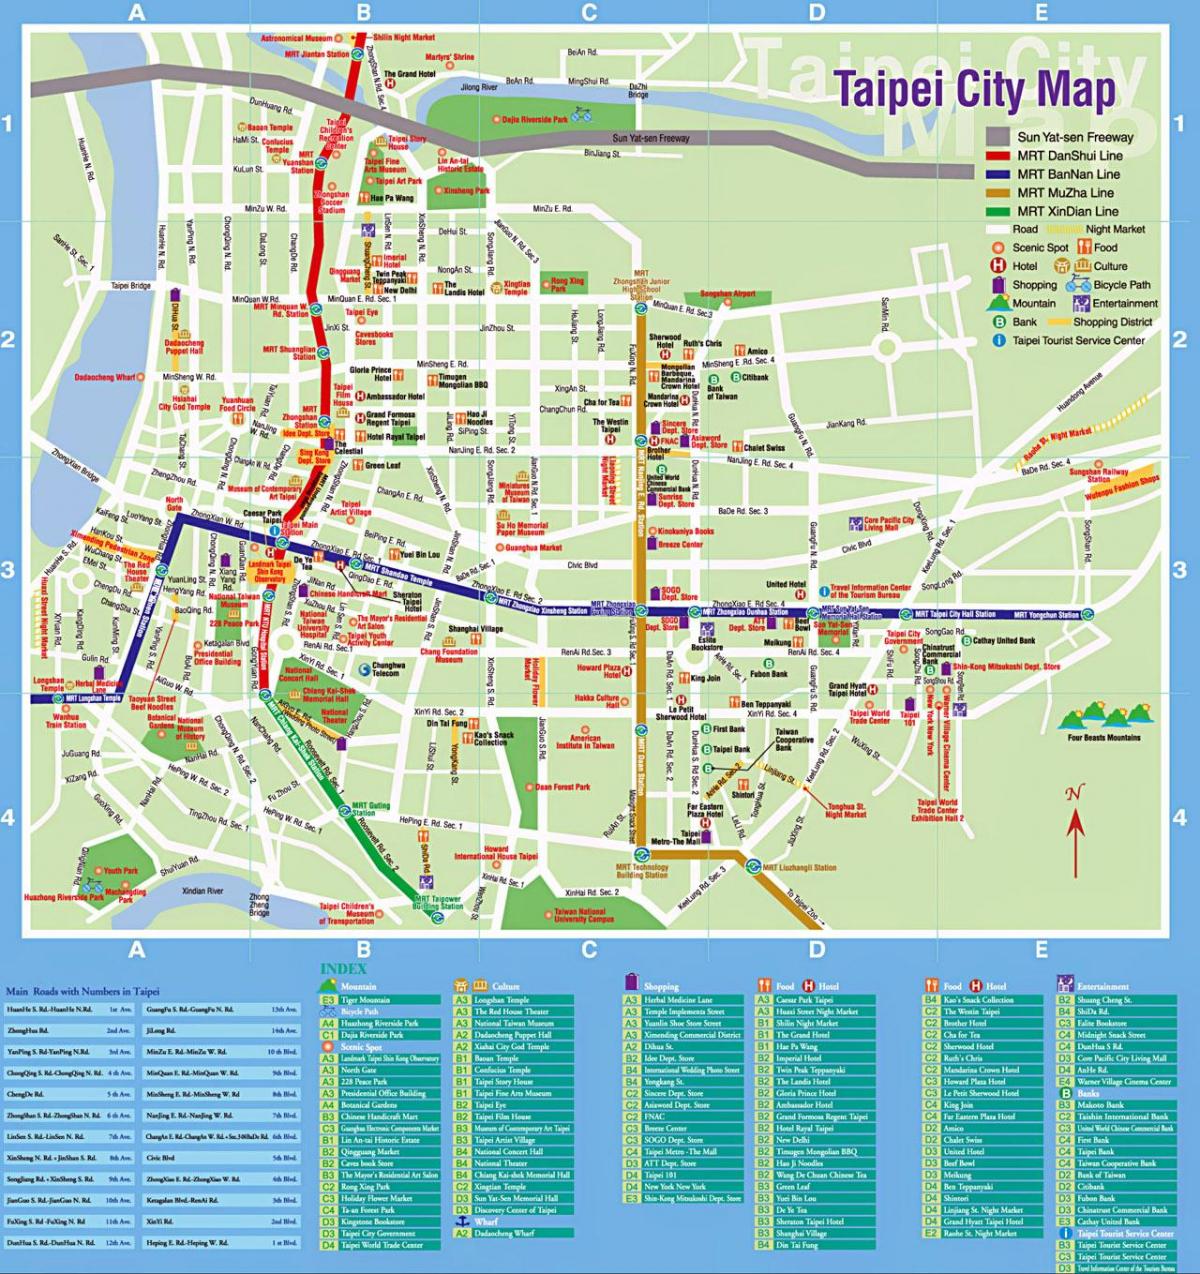 Taipei bersiar-siar peta